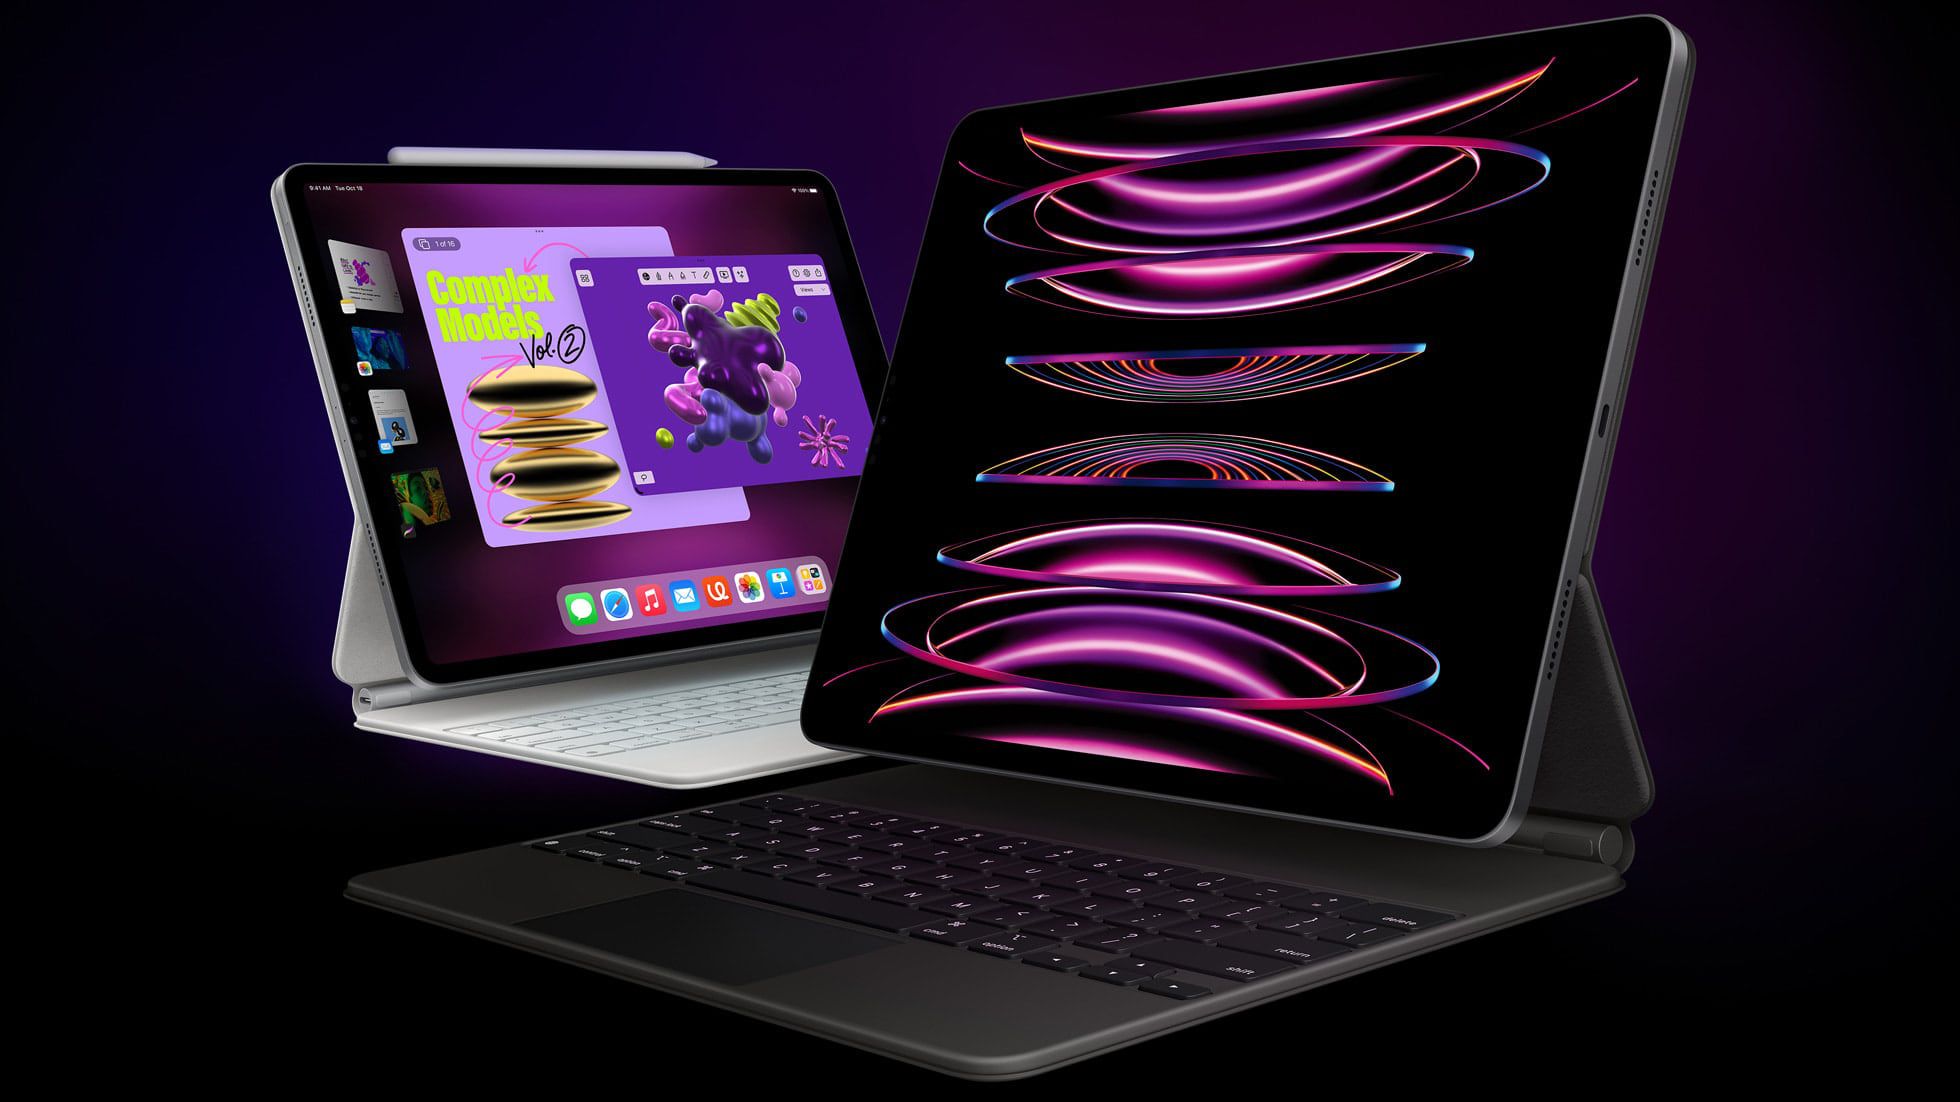 Gurman: Redesigned Magic Keyboard to Accompany New iPad Pro